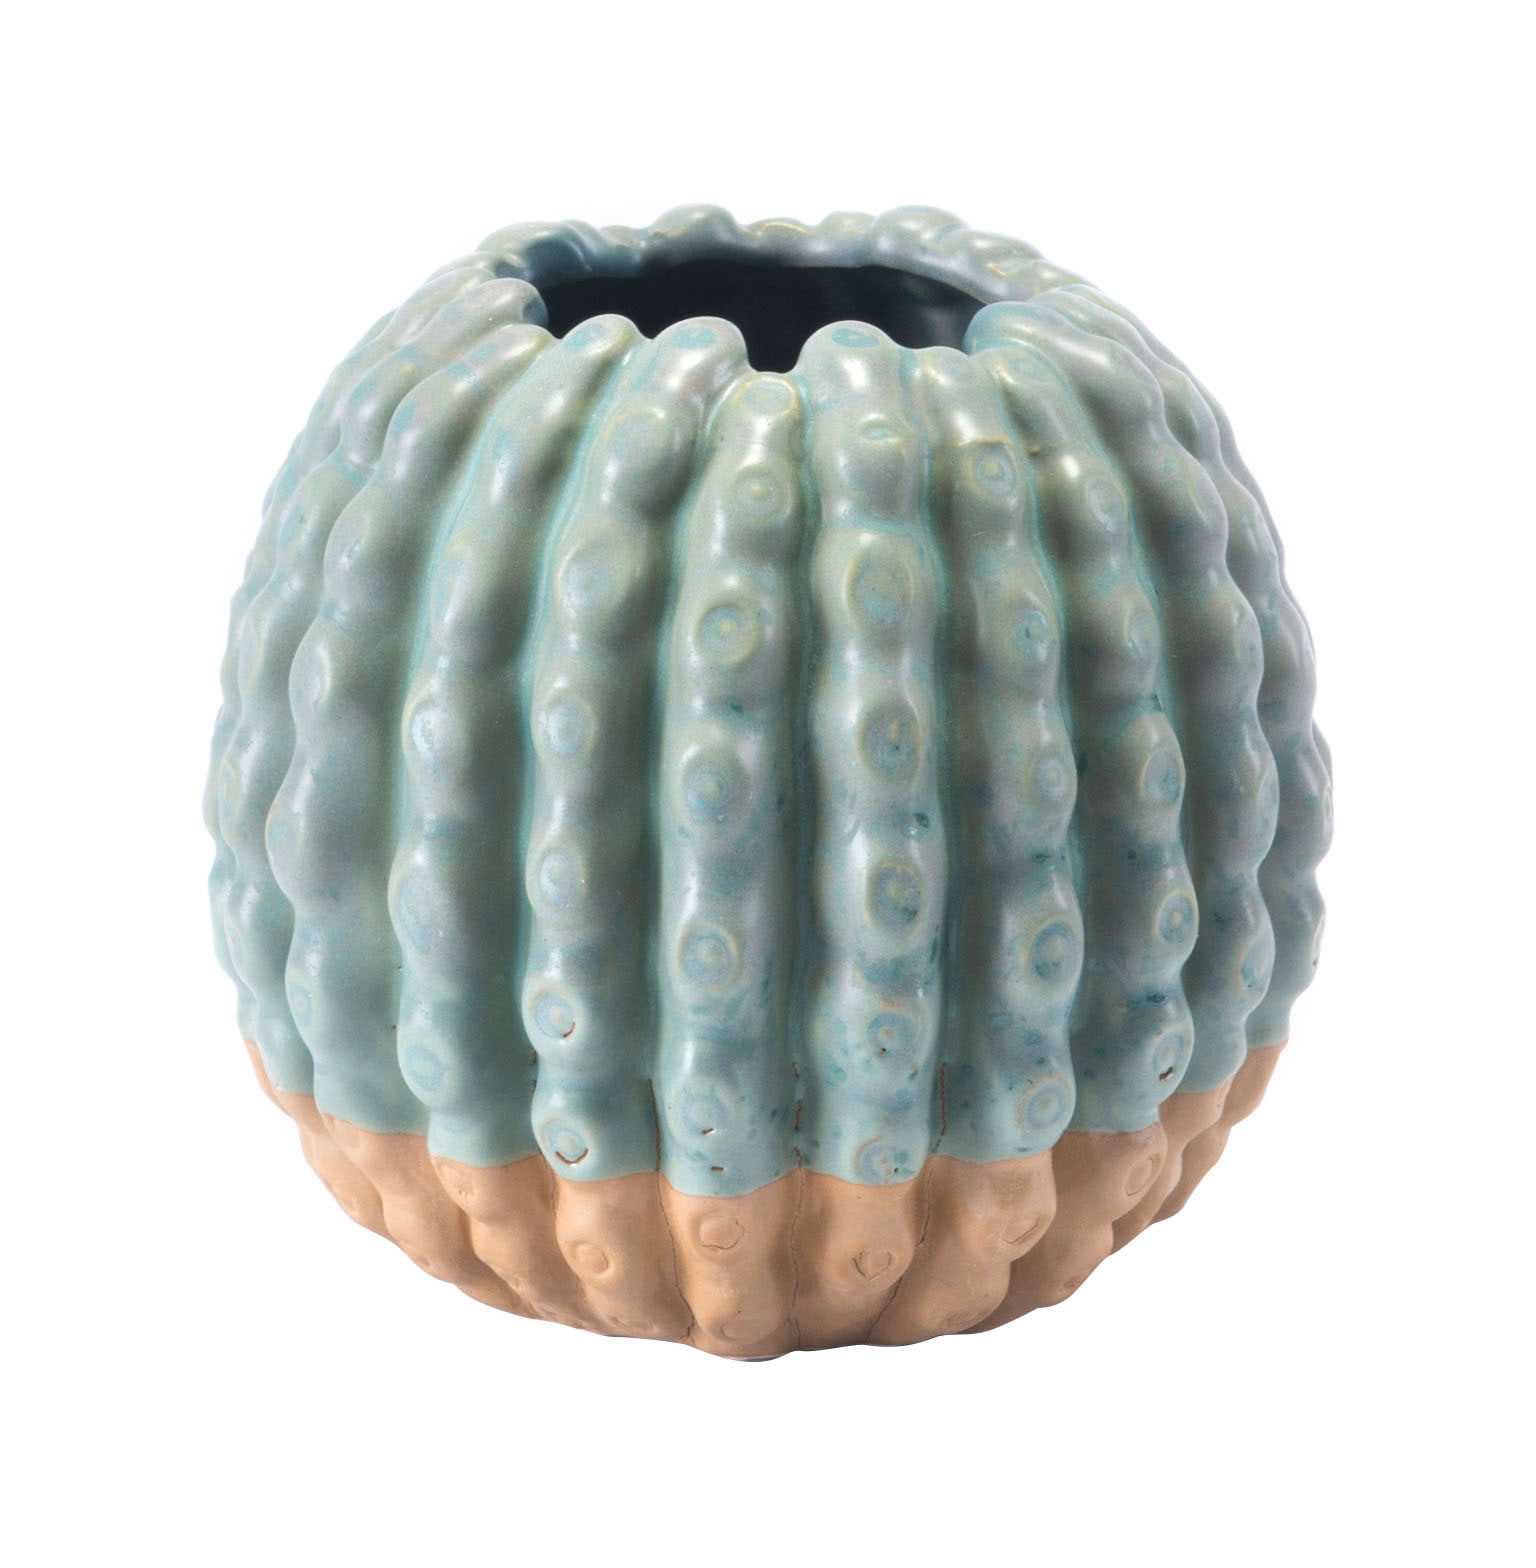 5.9" x 5.9" x 5.5" Green, Ceramic, Small Vase